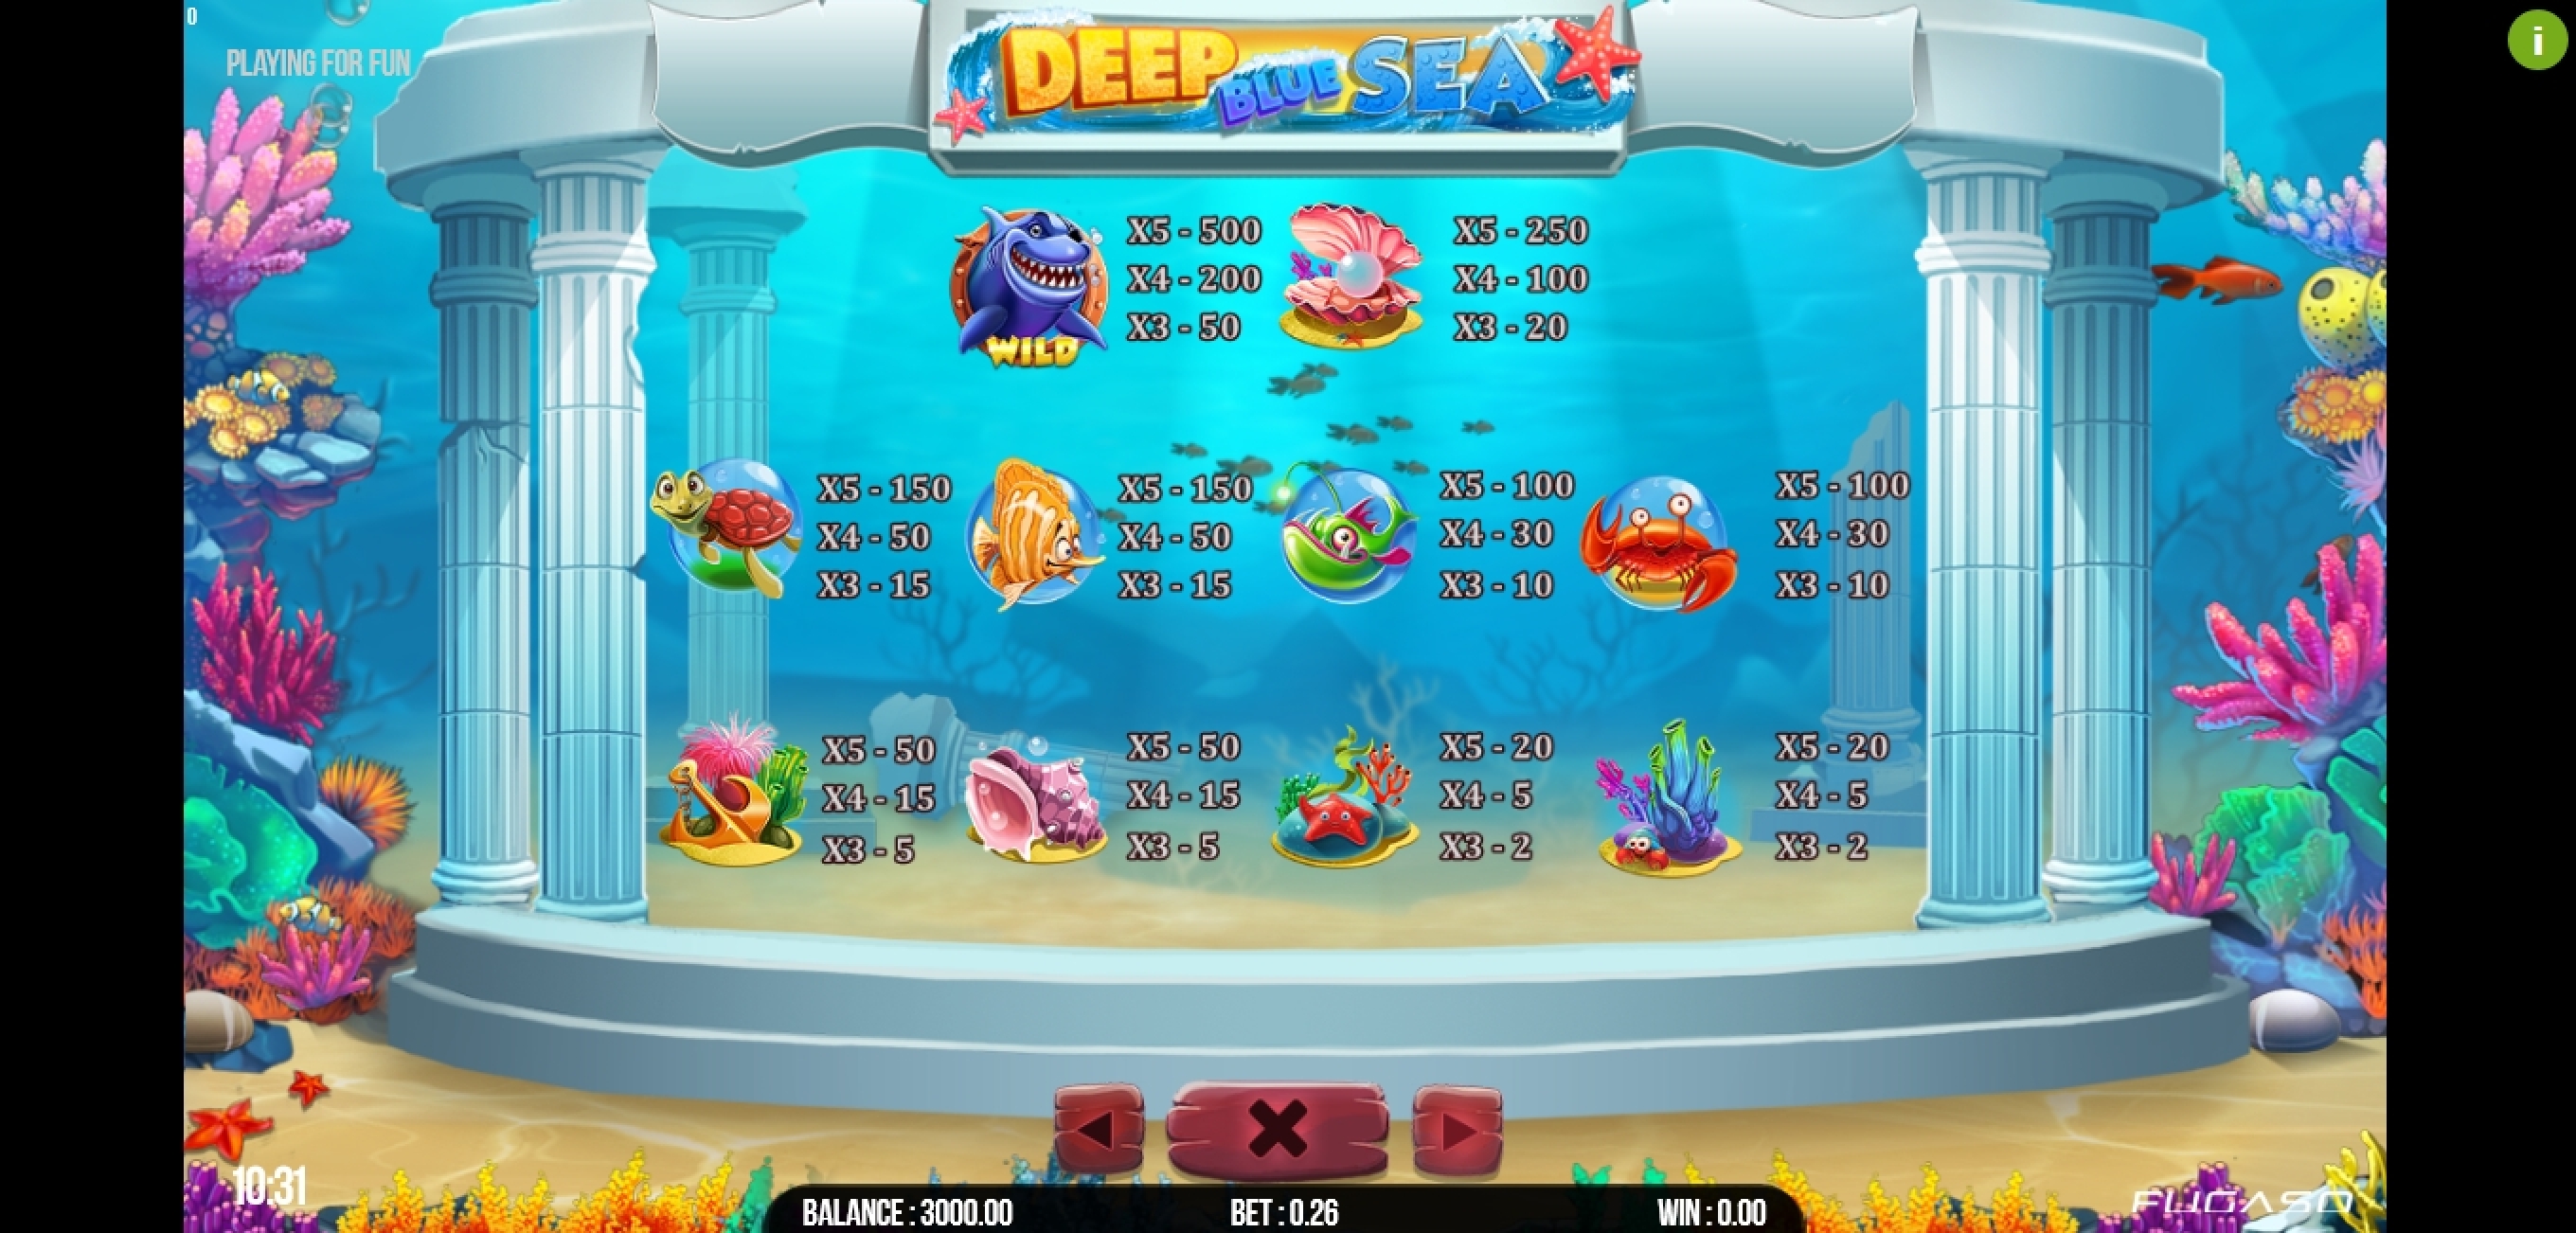 Info of Deep Blue Sea Slot Game by Fugaso